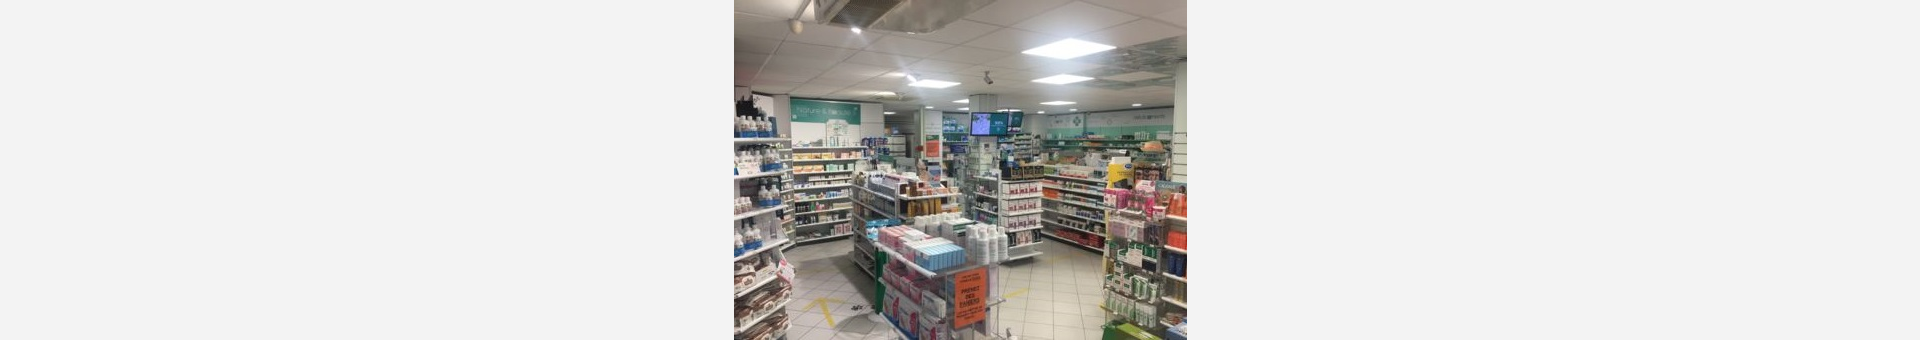 Pharmacie Du Golfe,Saint-Cyr-sur-Mer